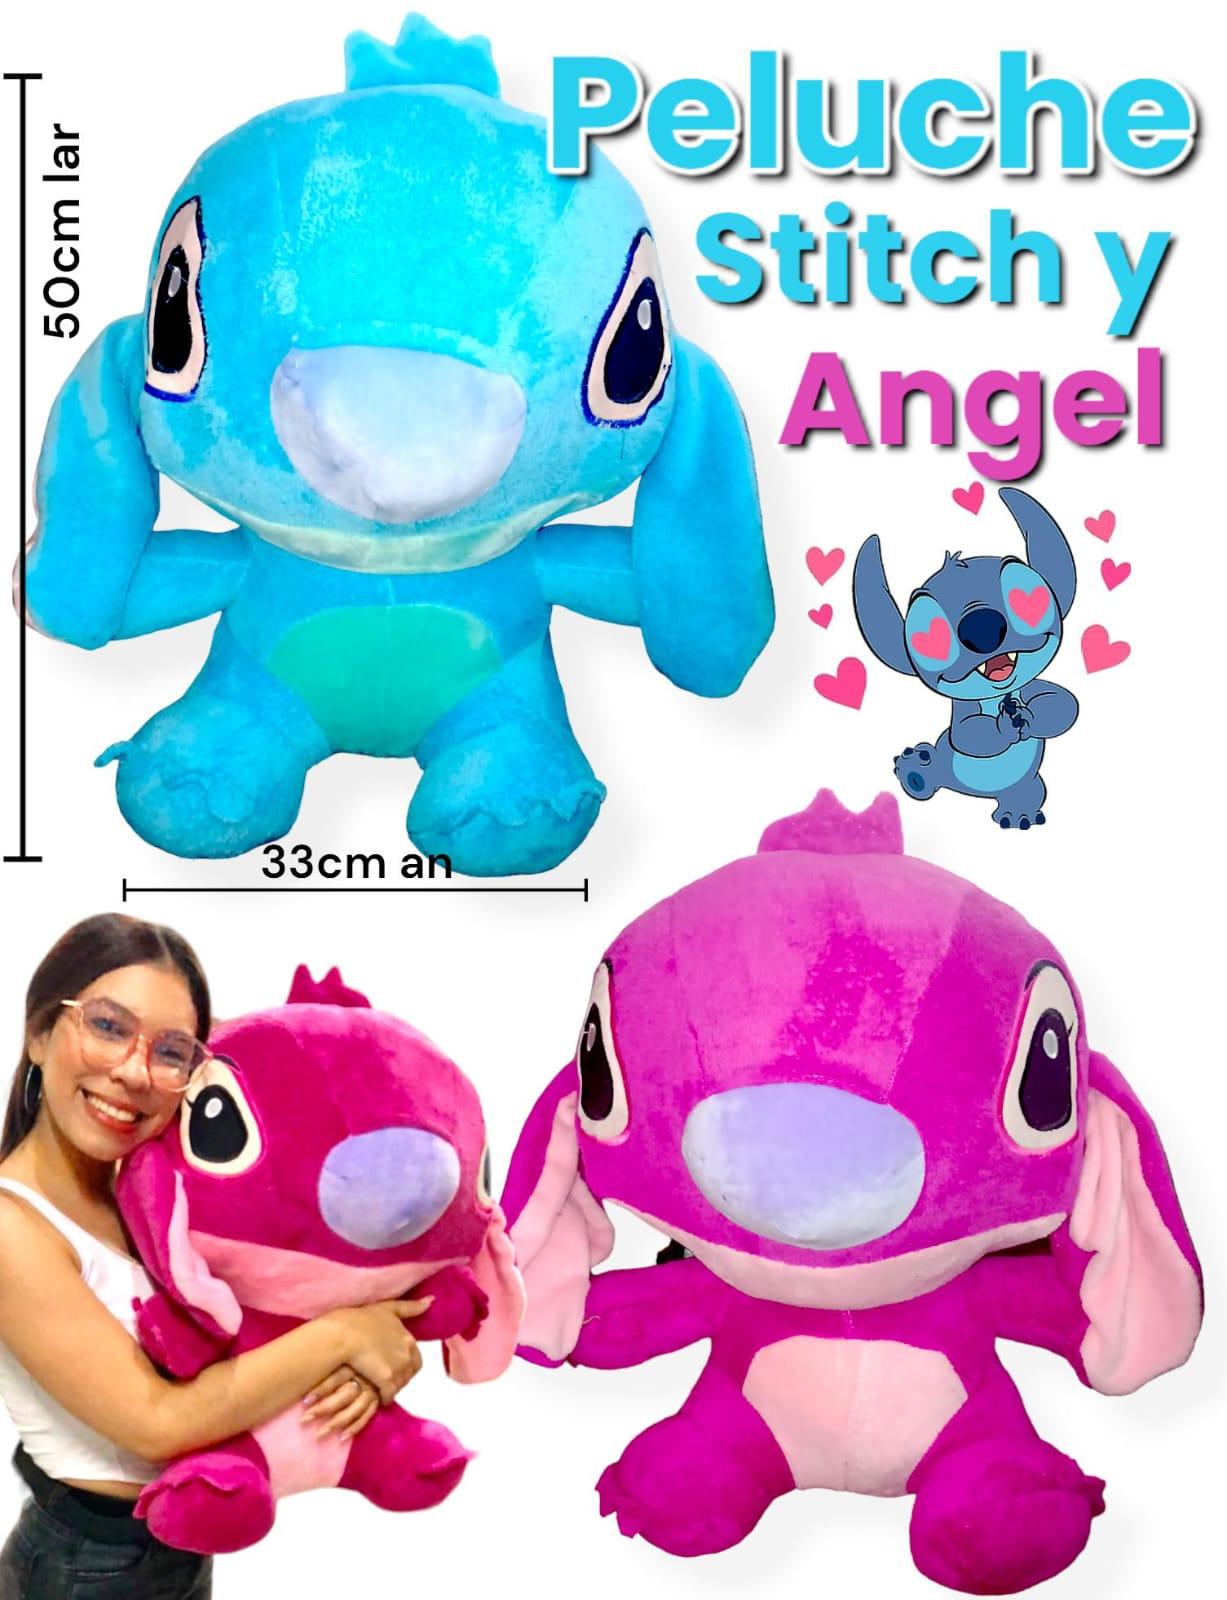 Peluche Stitch y Angel 50cm 